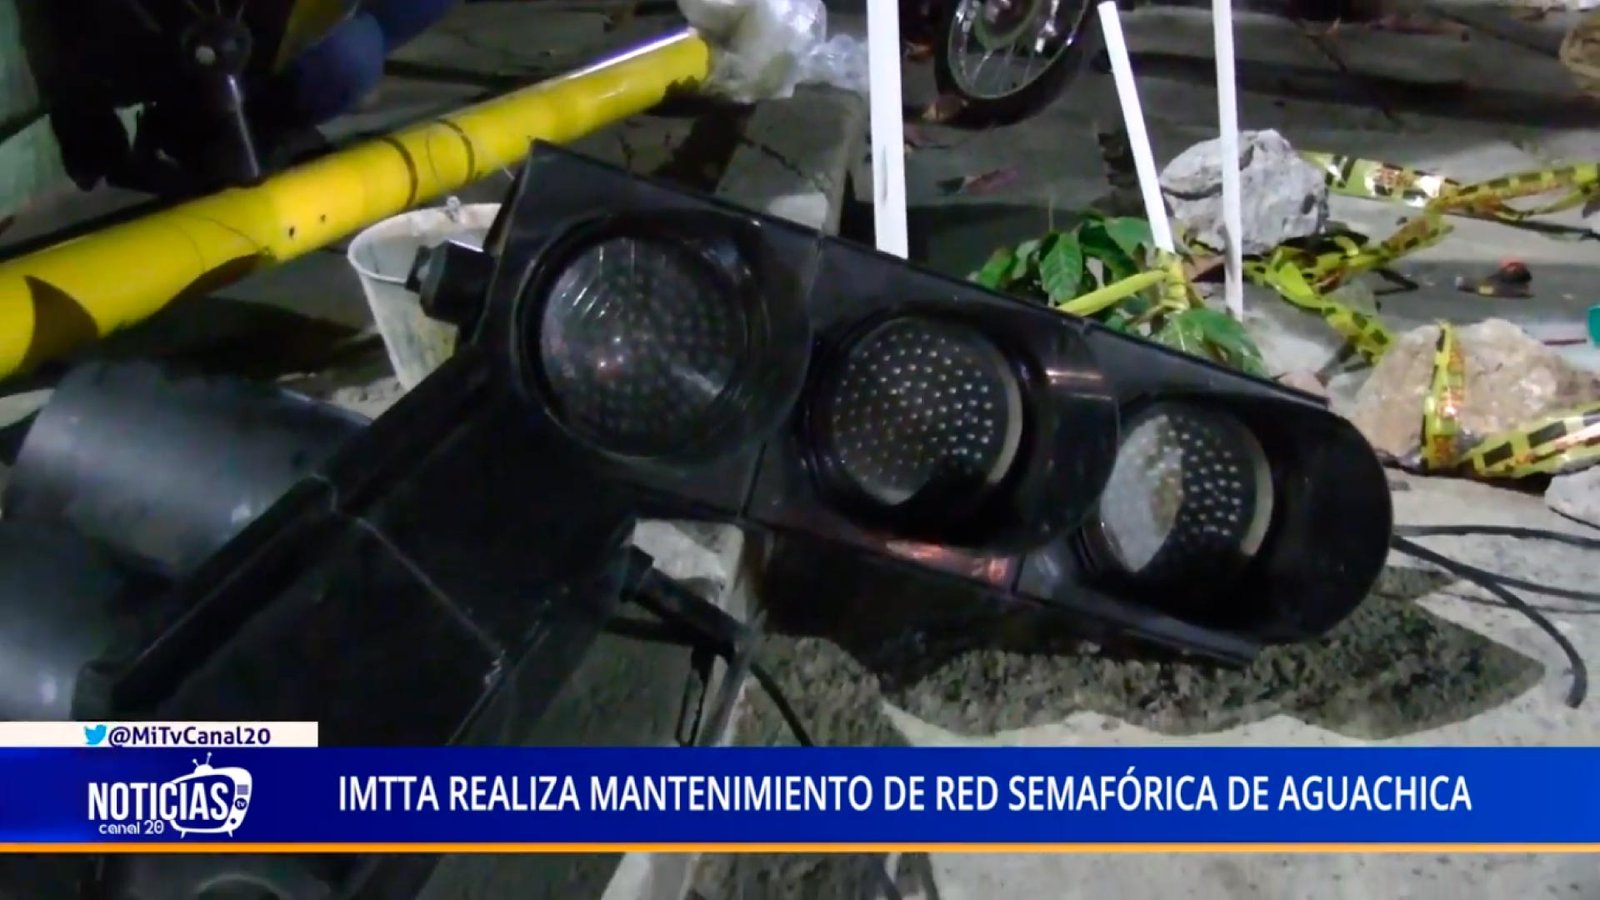 IMTTA REALIZA MANTENIMIENTO DE RED SEMAFÓRICA DE AGUACHICA